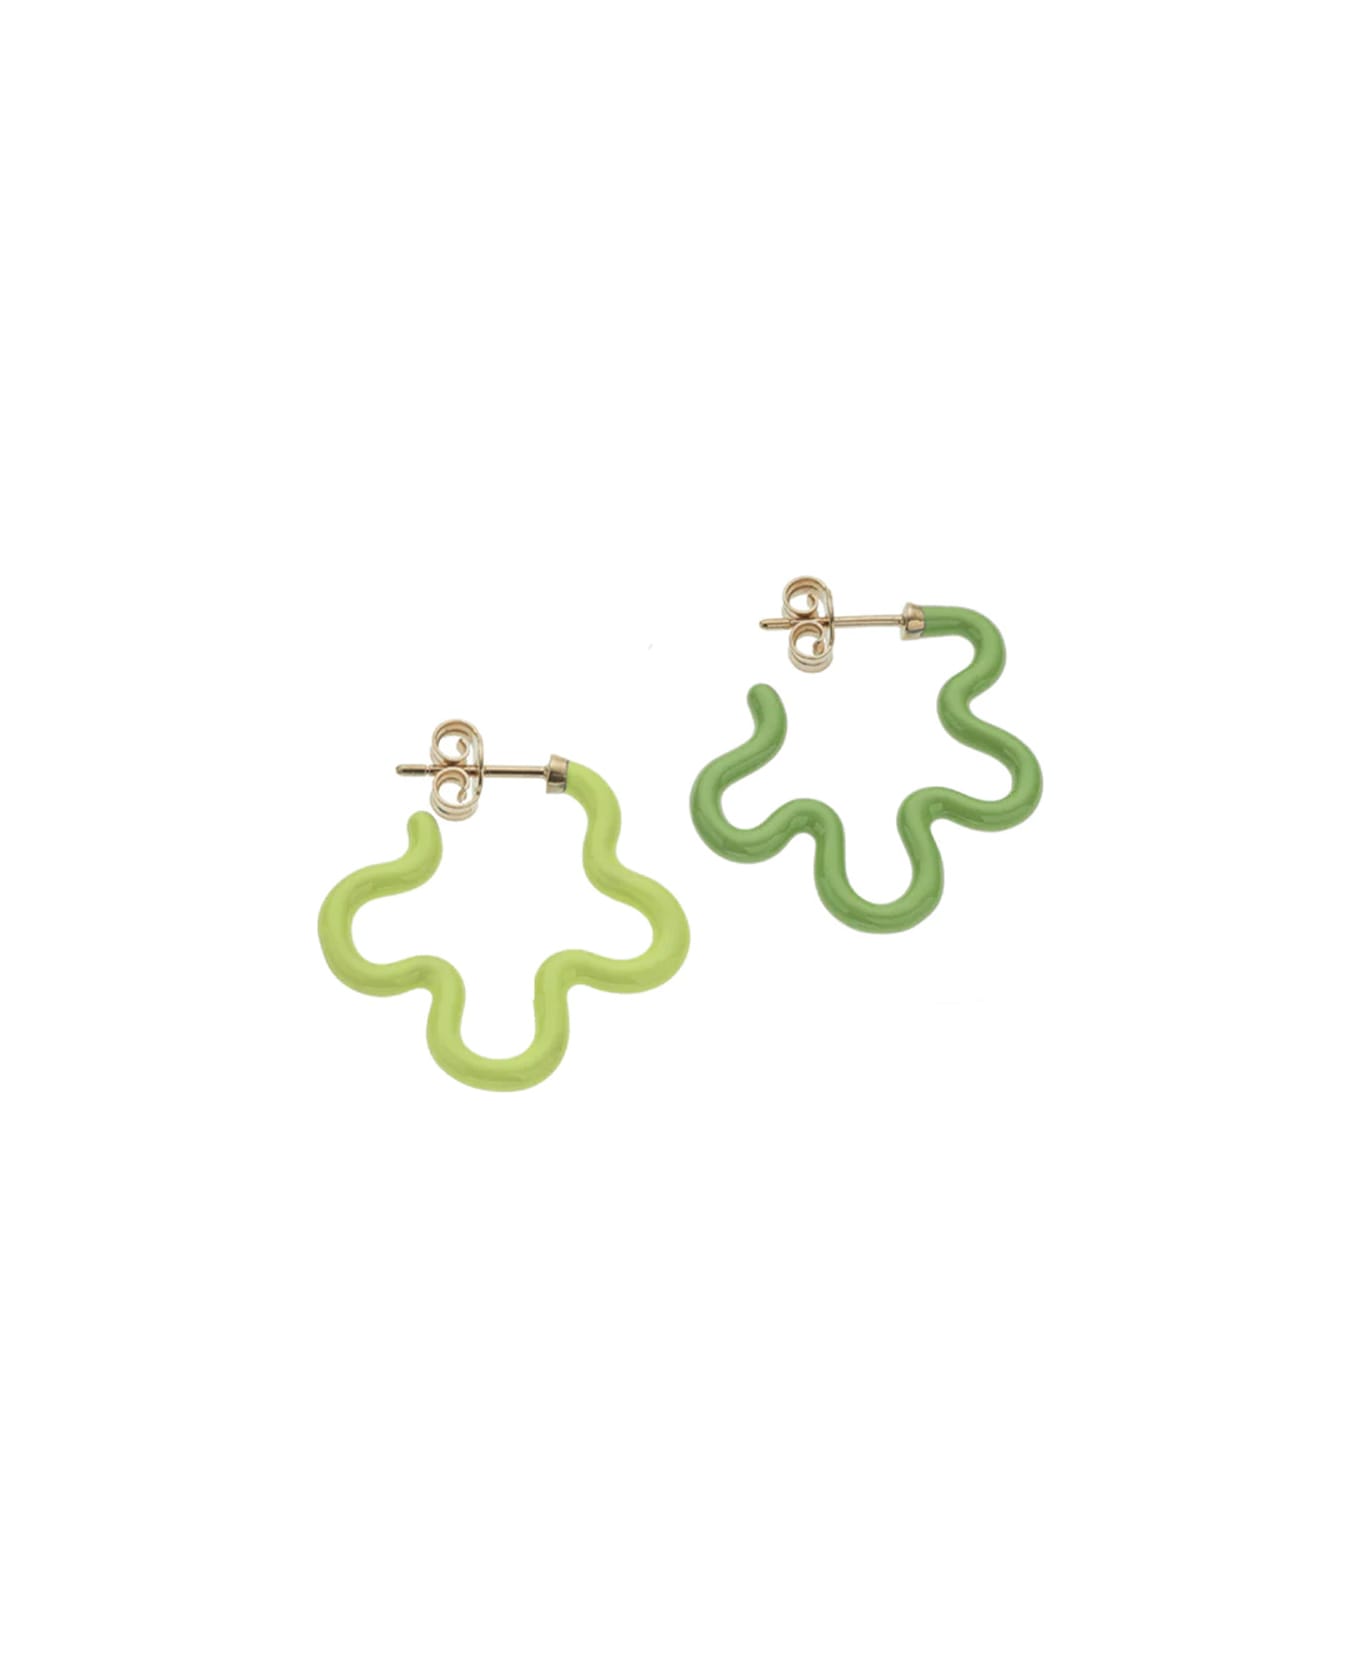 Bea Bongiasca 2 Tone Asymmetrical Flower Power Earrings In Lime And Green - Green イヤリング